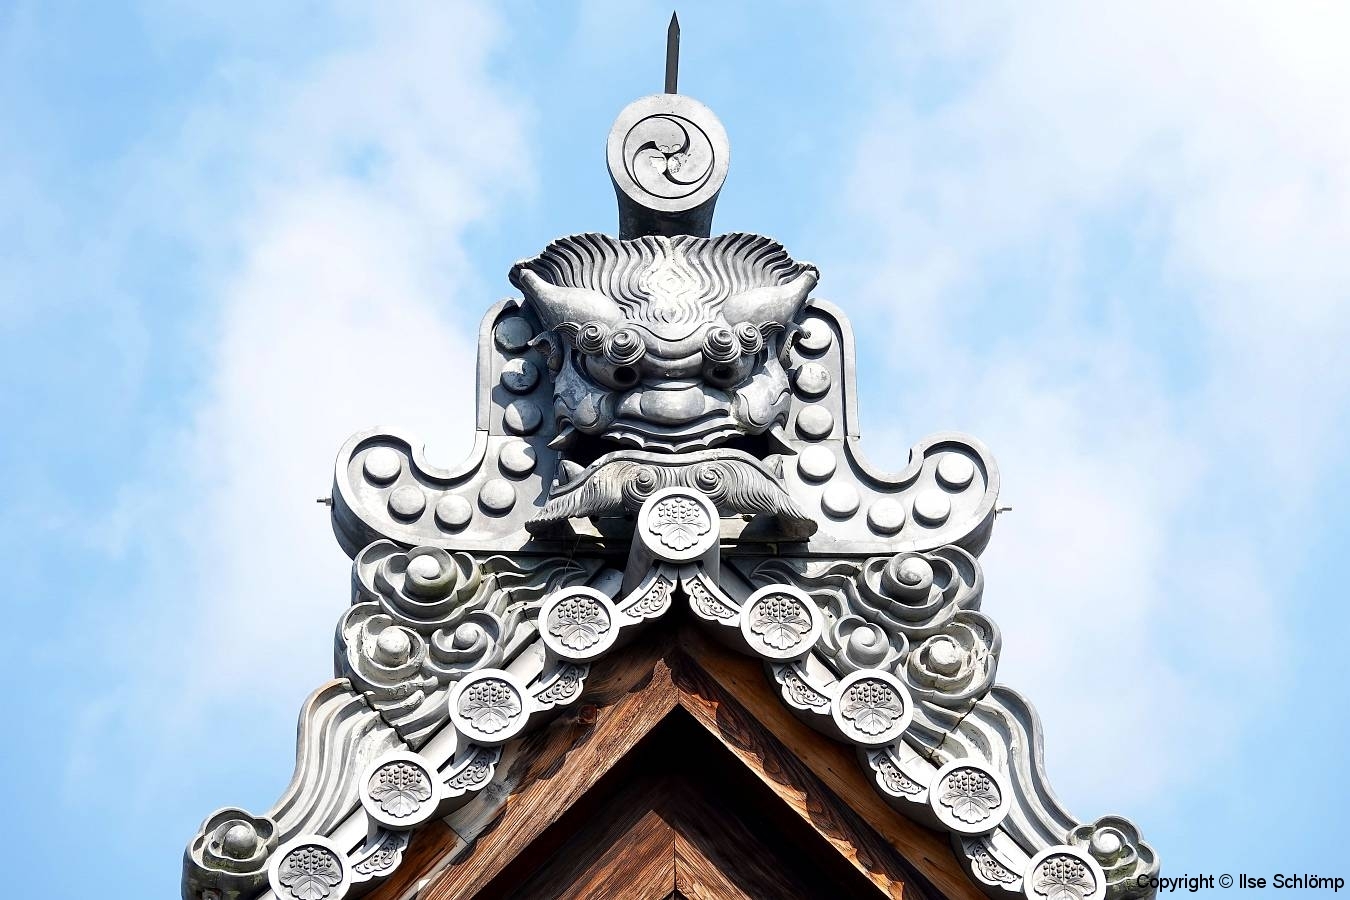 Japan, Kyoto, Ryoan-ji Tempel